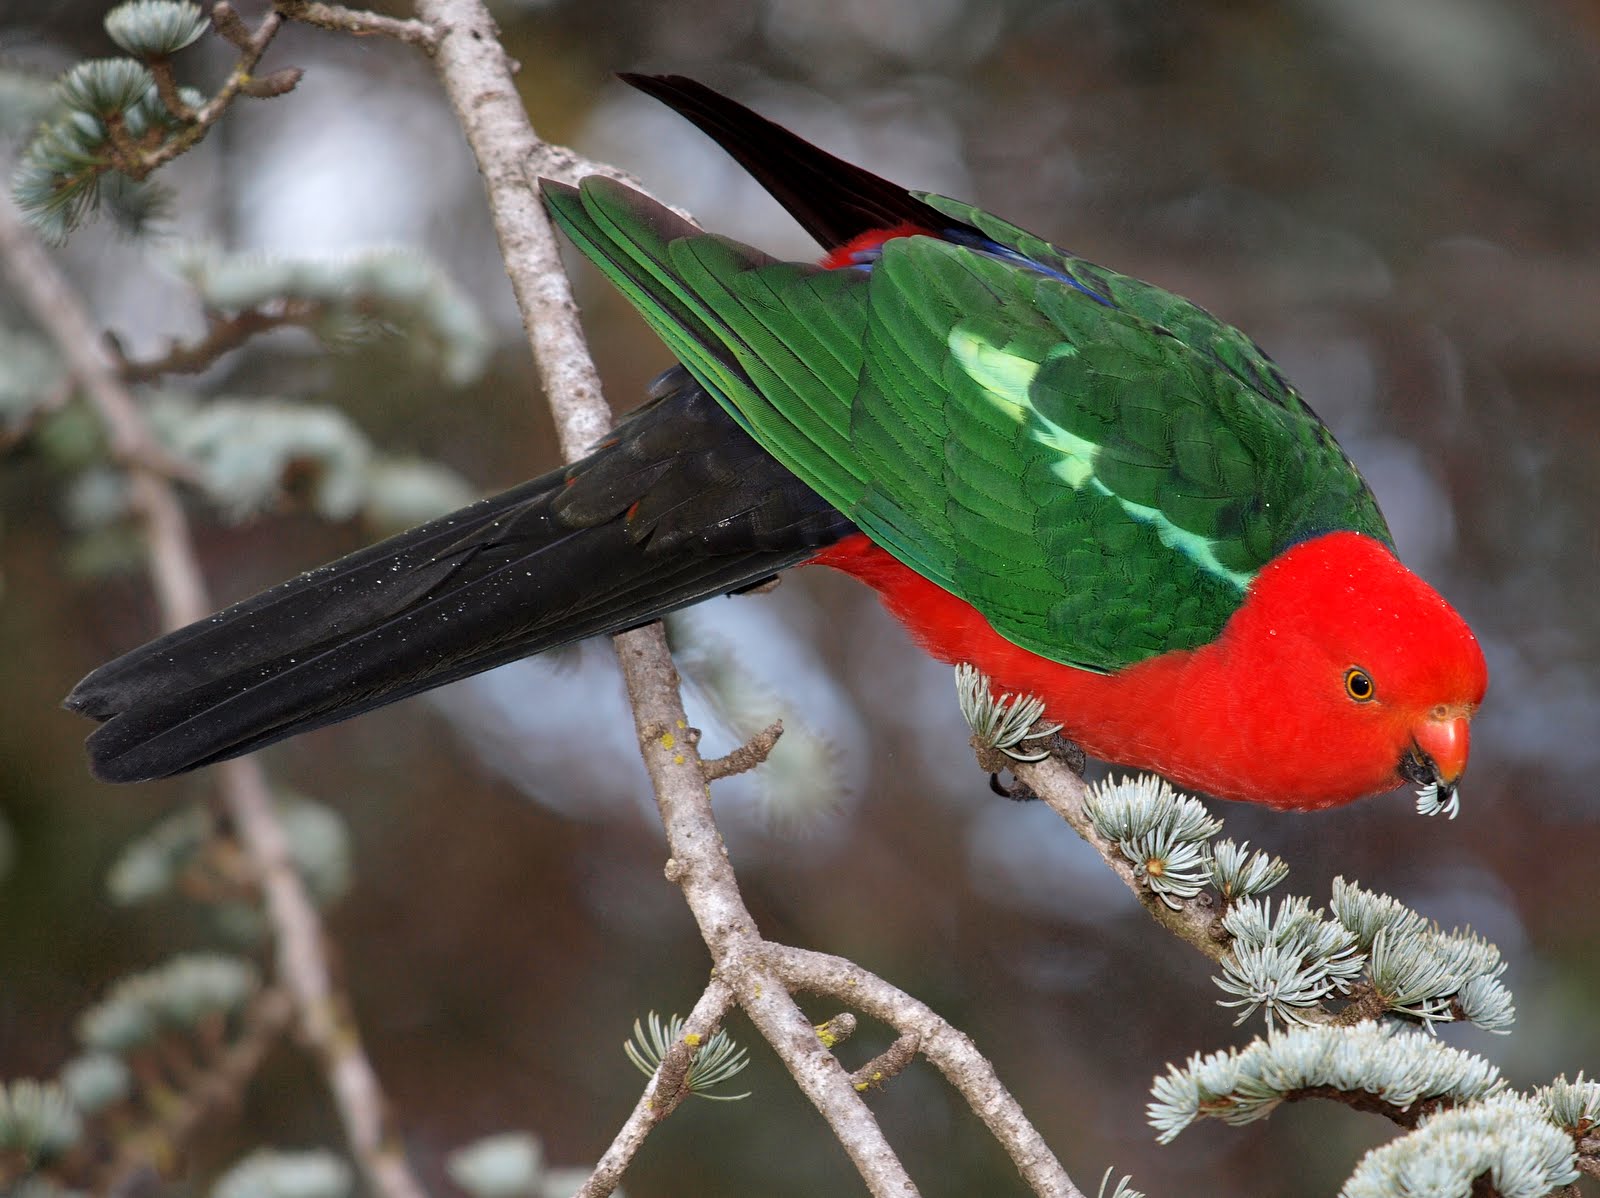 Australian King Parrot - The most beautiful bird pictures - The most beautiful bird pictures - NeotericIT.com